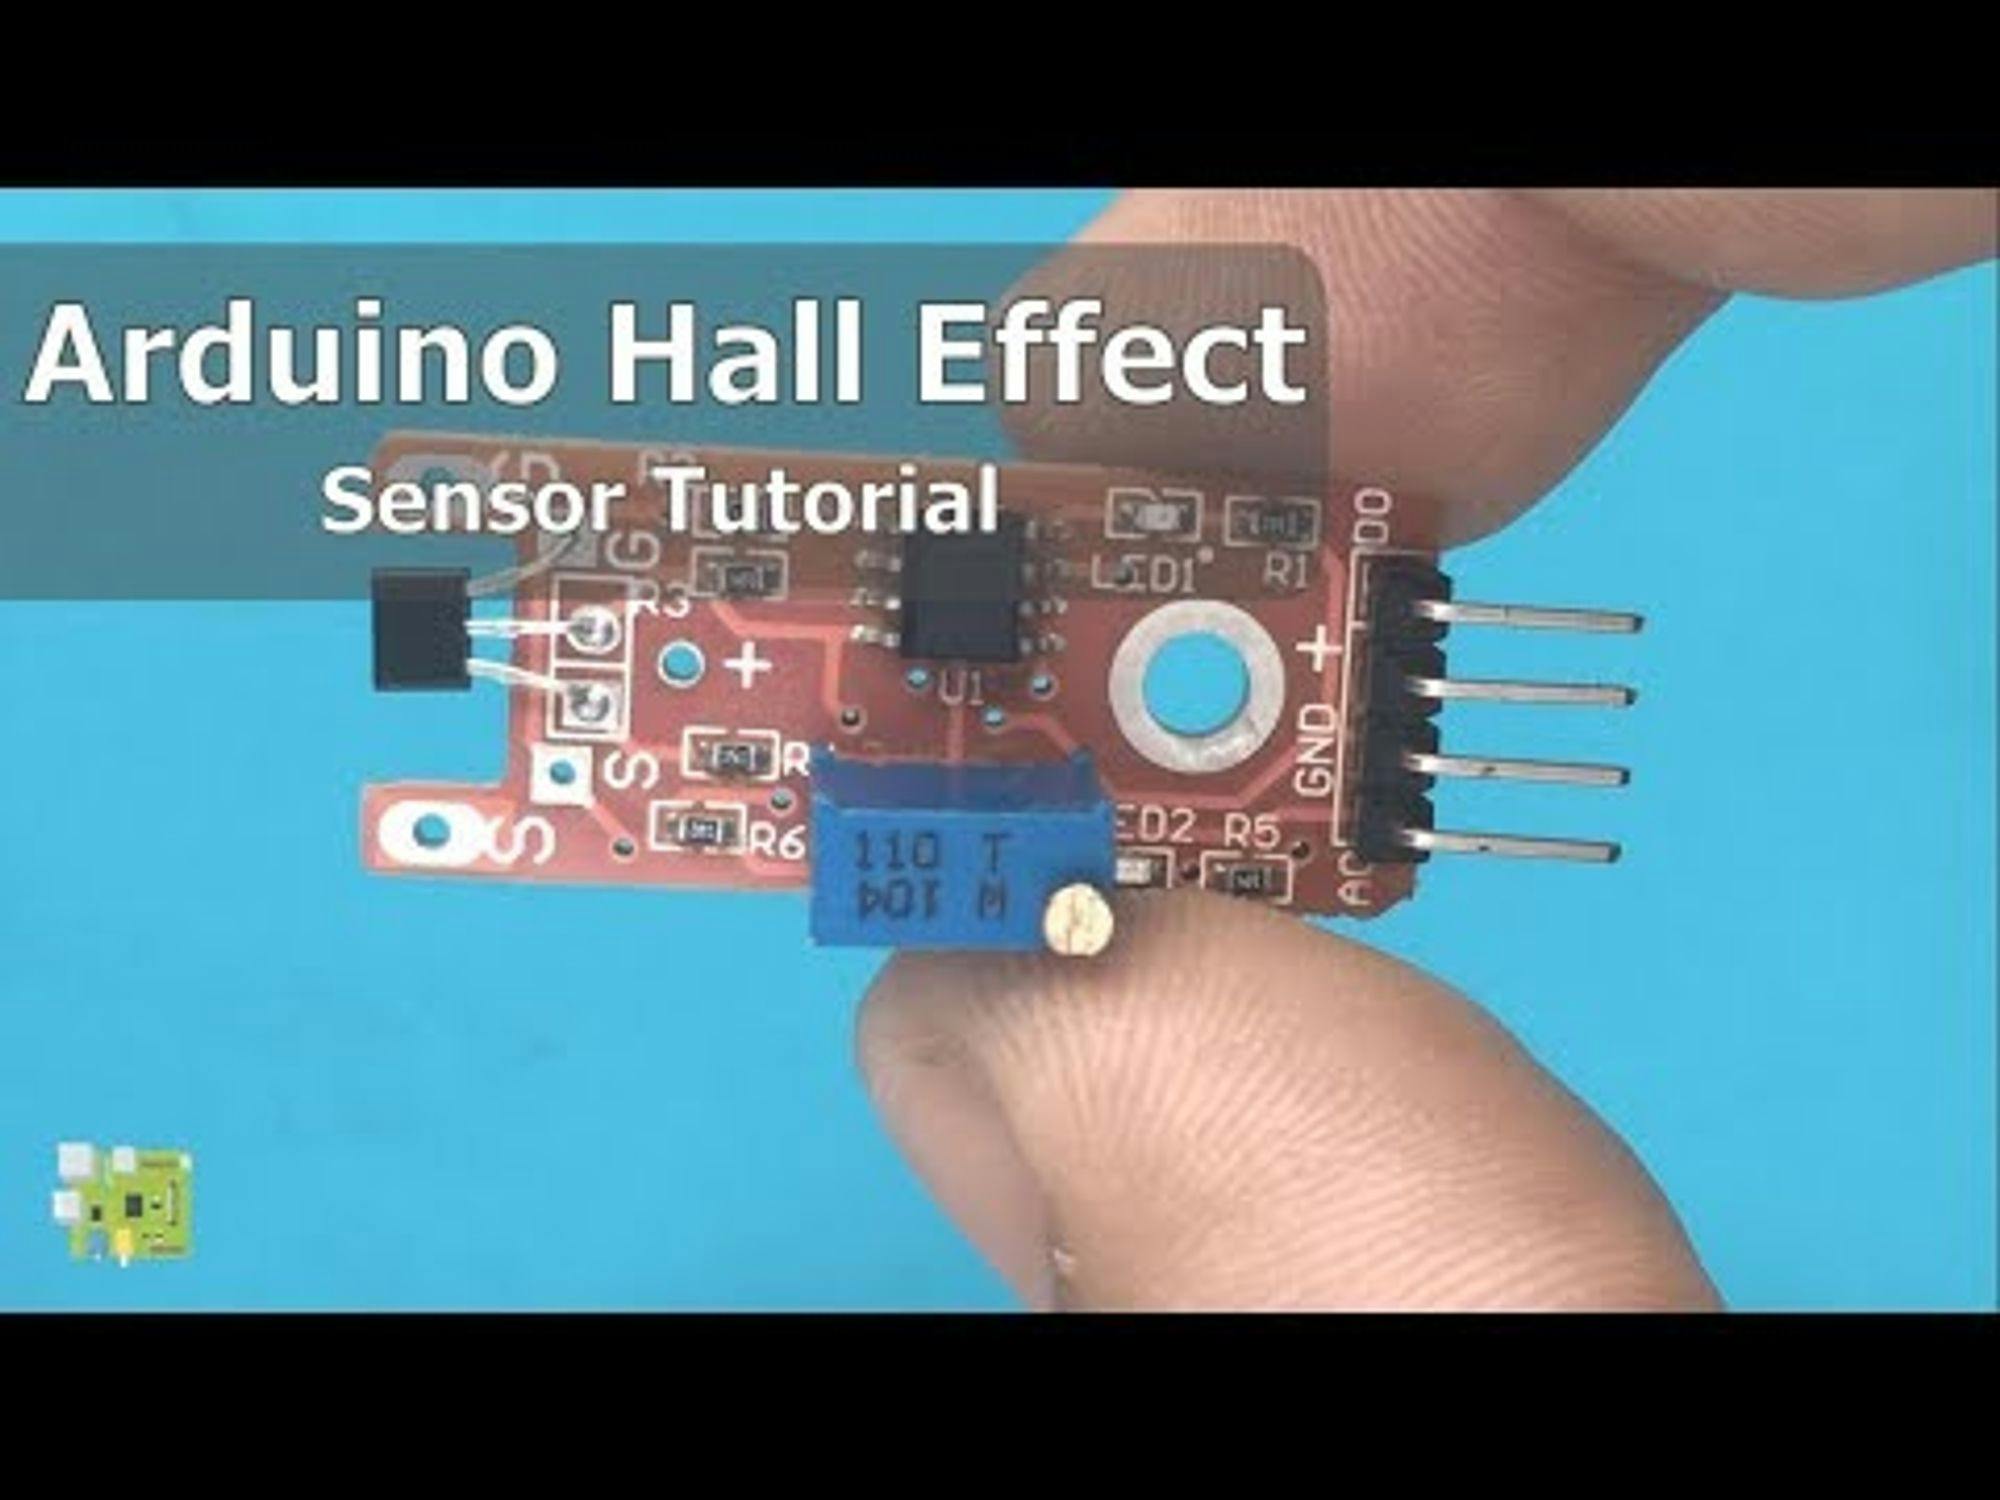 Hall Effect Sensor Tutorial with Arduino